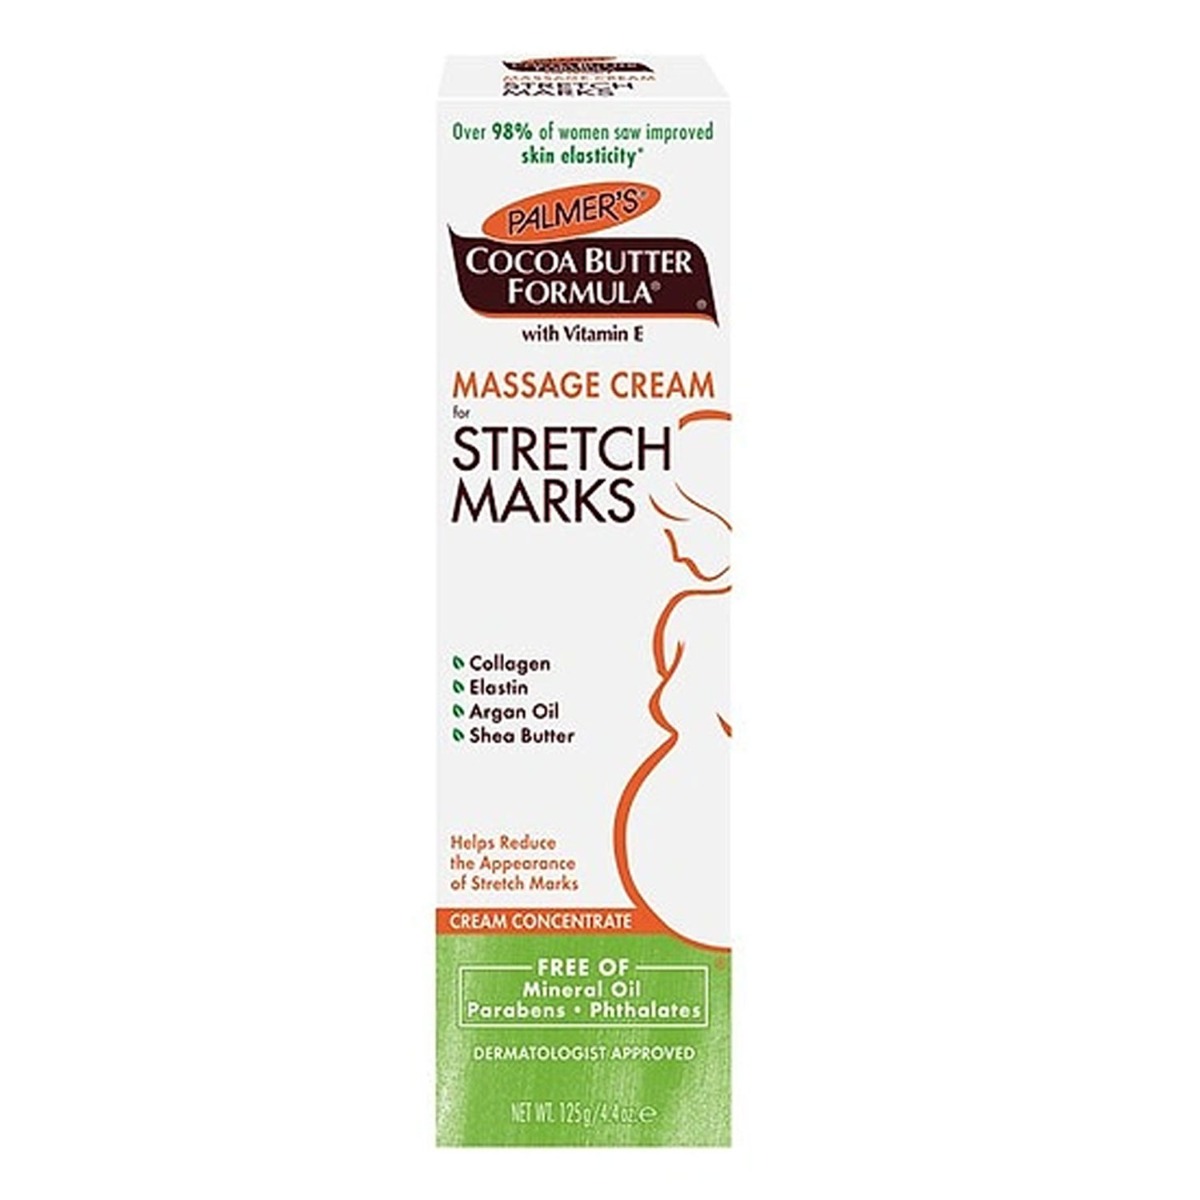 Palmer’s Cocoa Butter Formula Massage Cream For Stretch Marks, 125gm